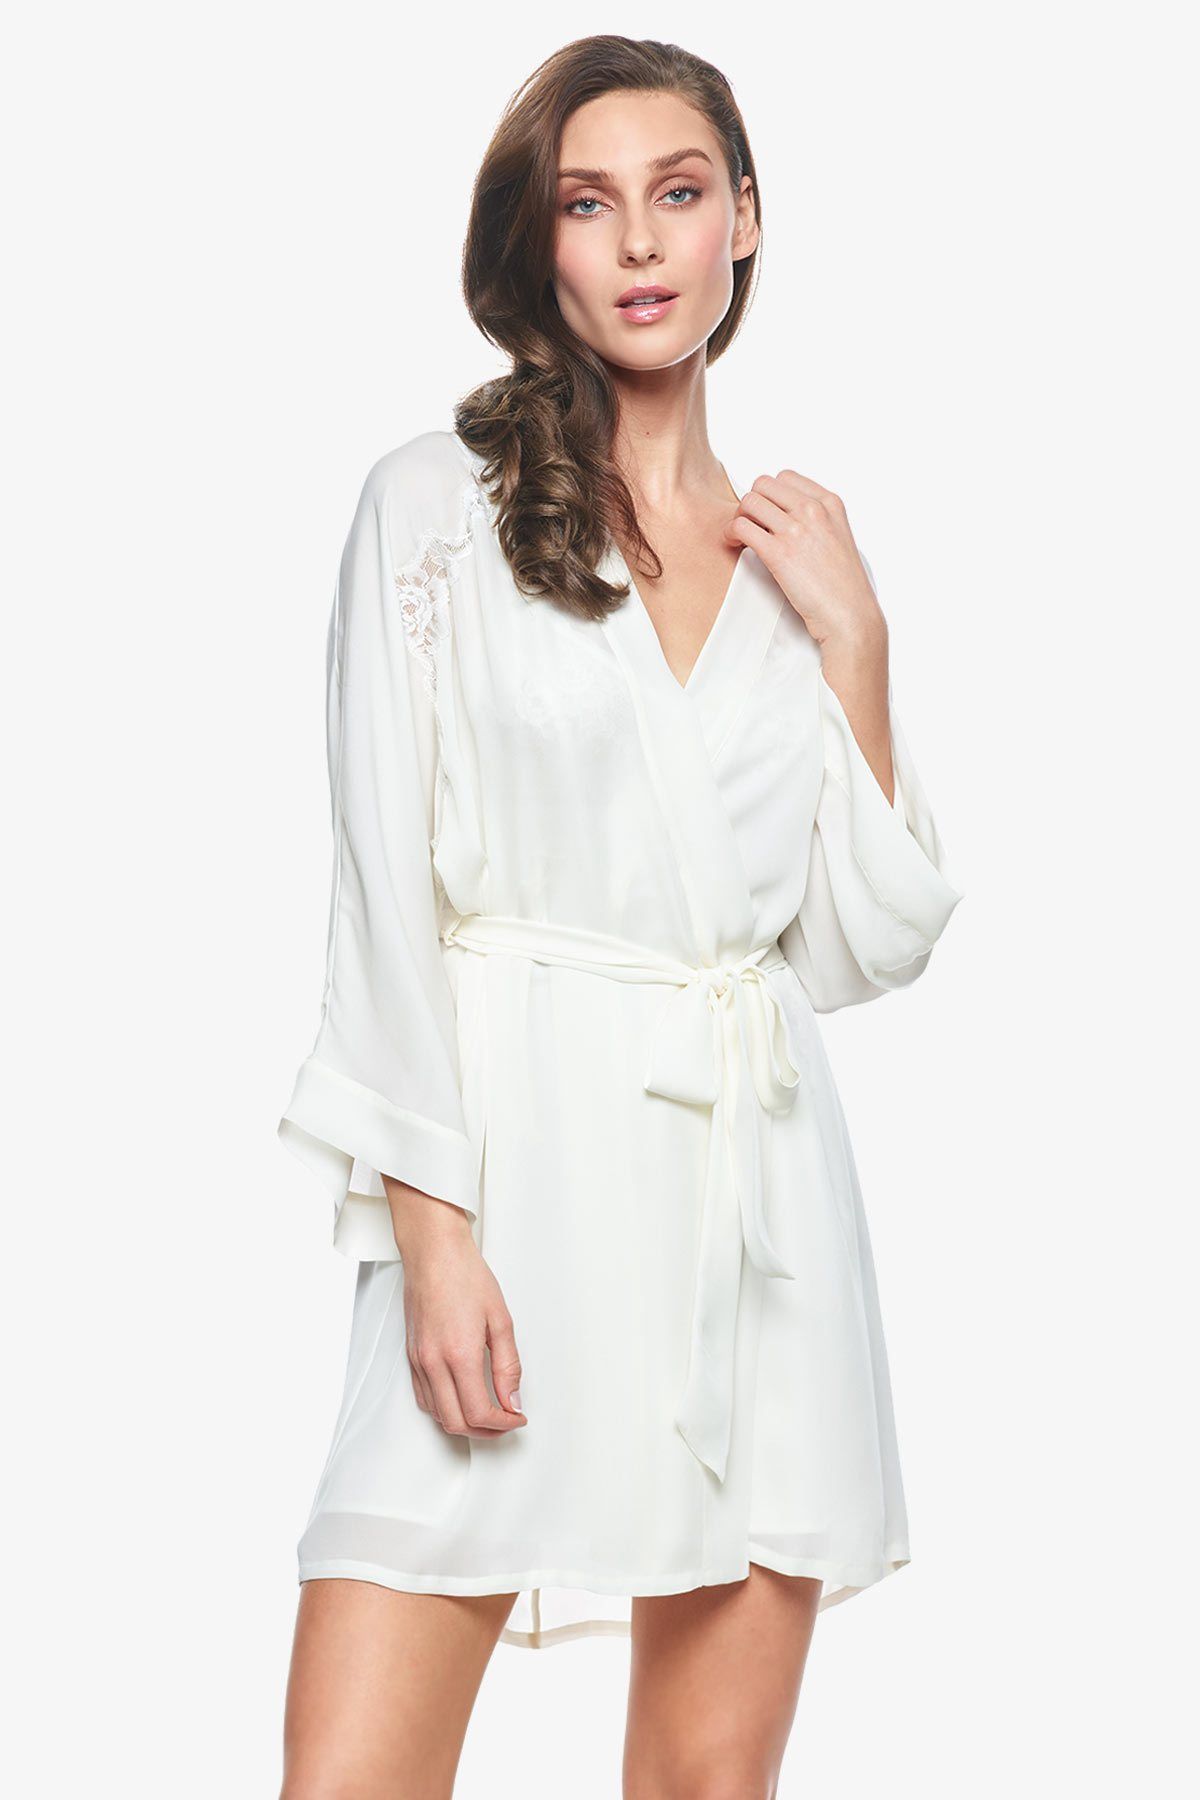 Model showcasing Sigrid short bridal robes in pearl-white